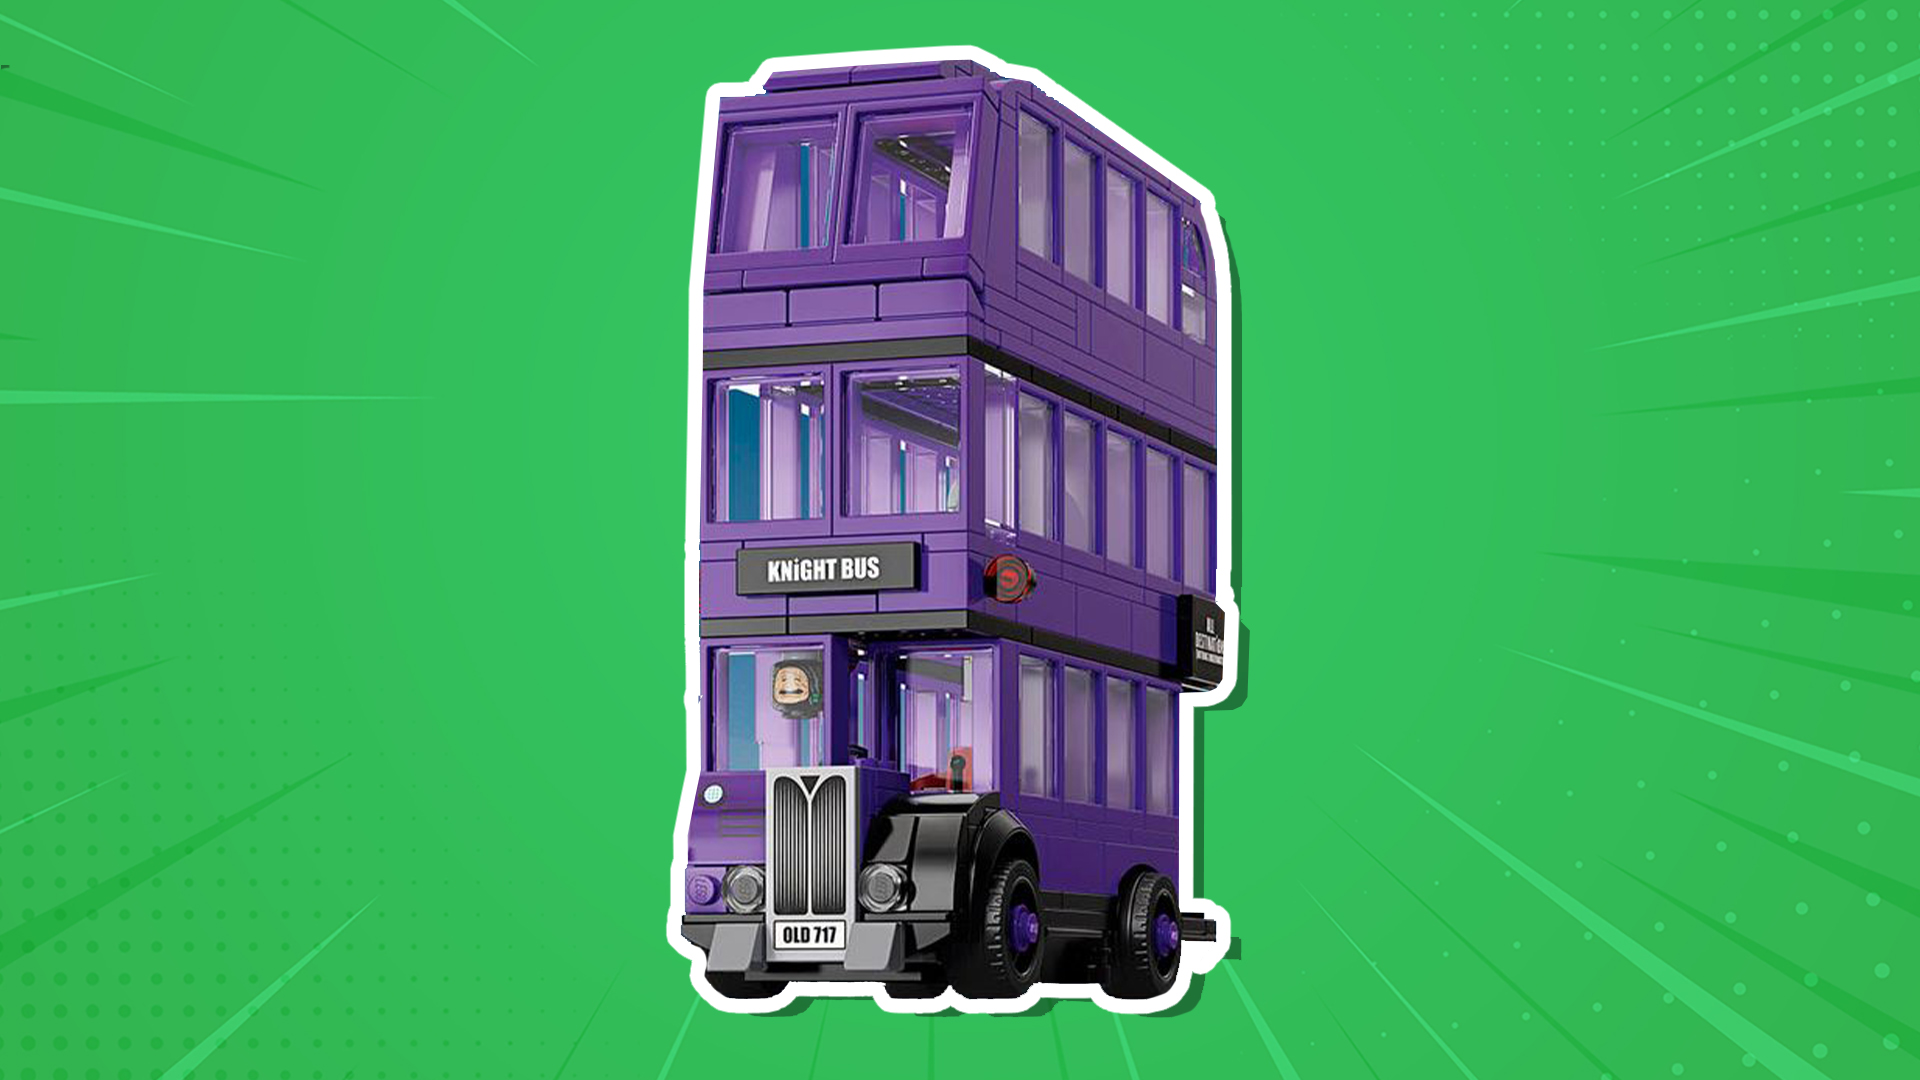 A LEGO Harry Potter Knight Bus